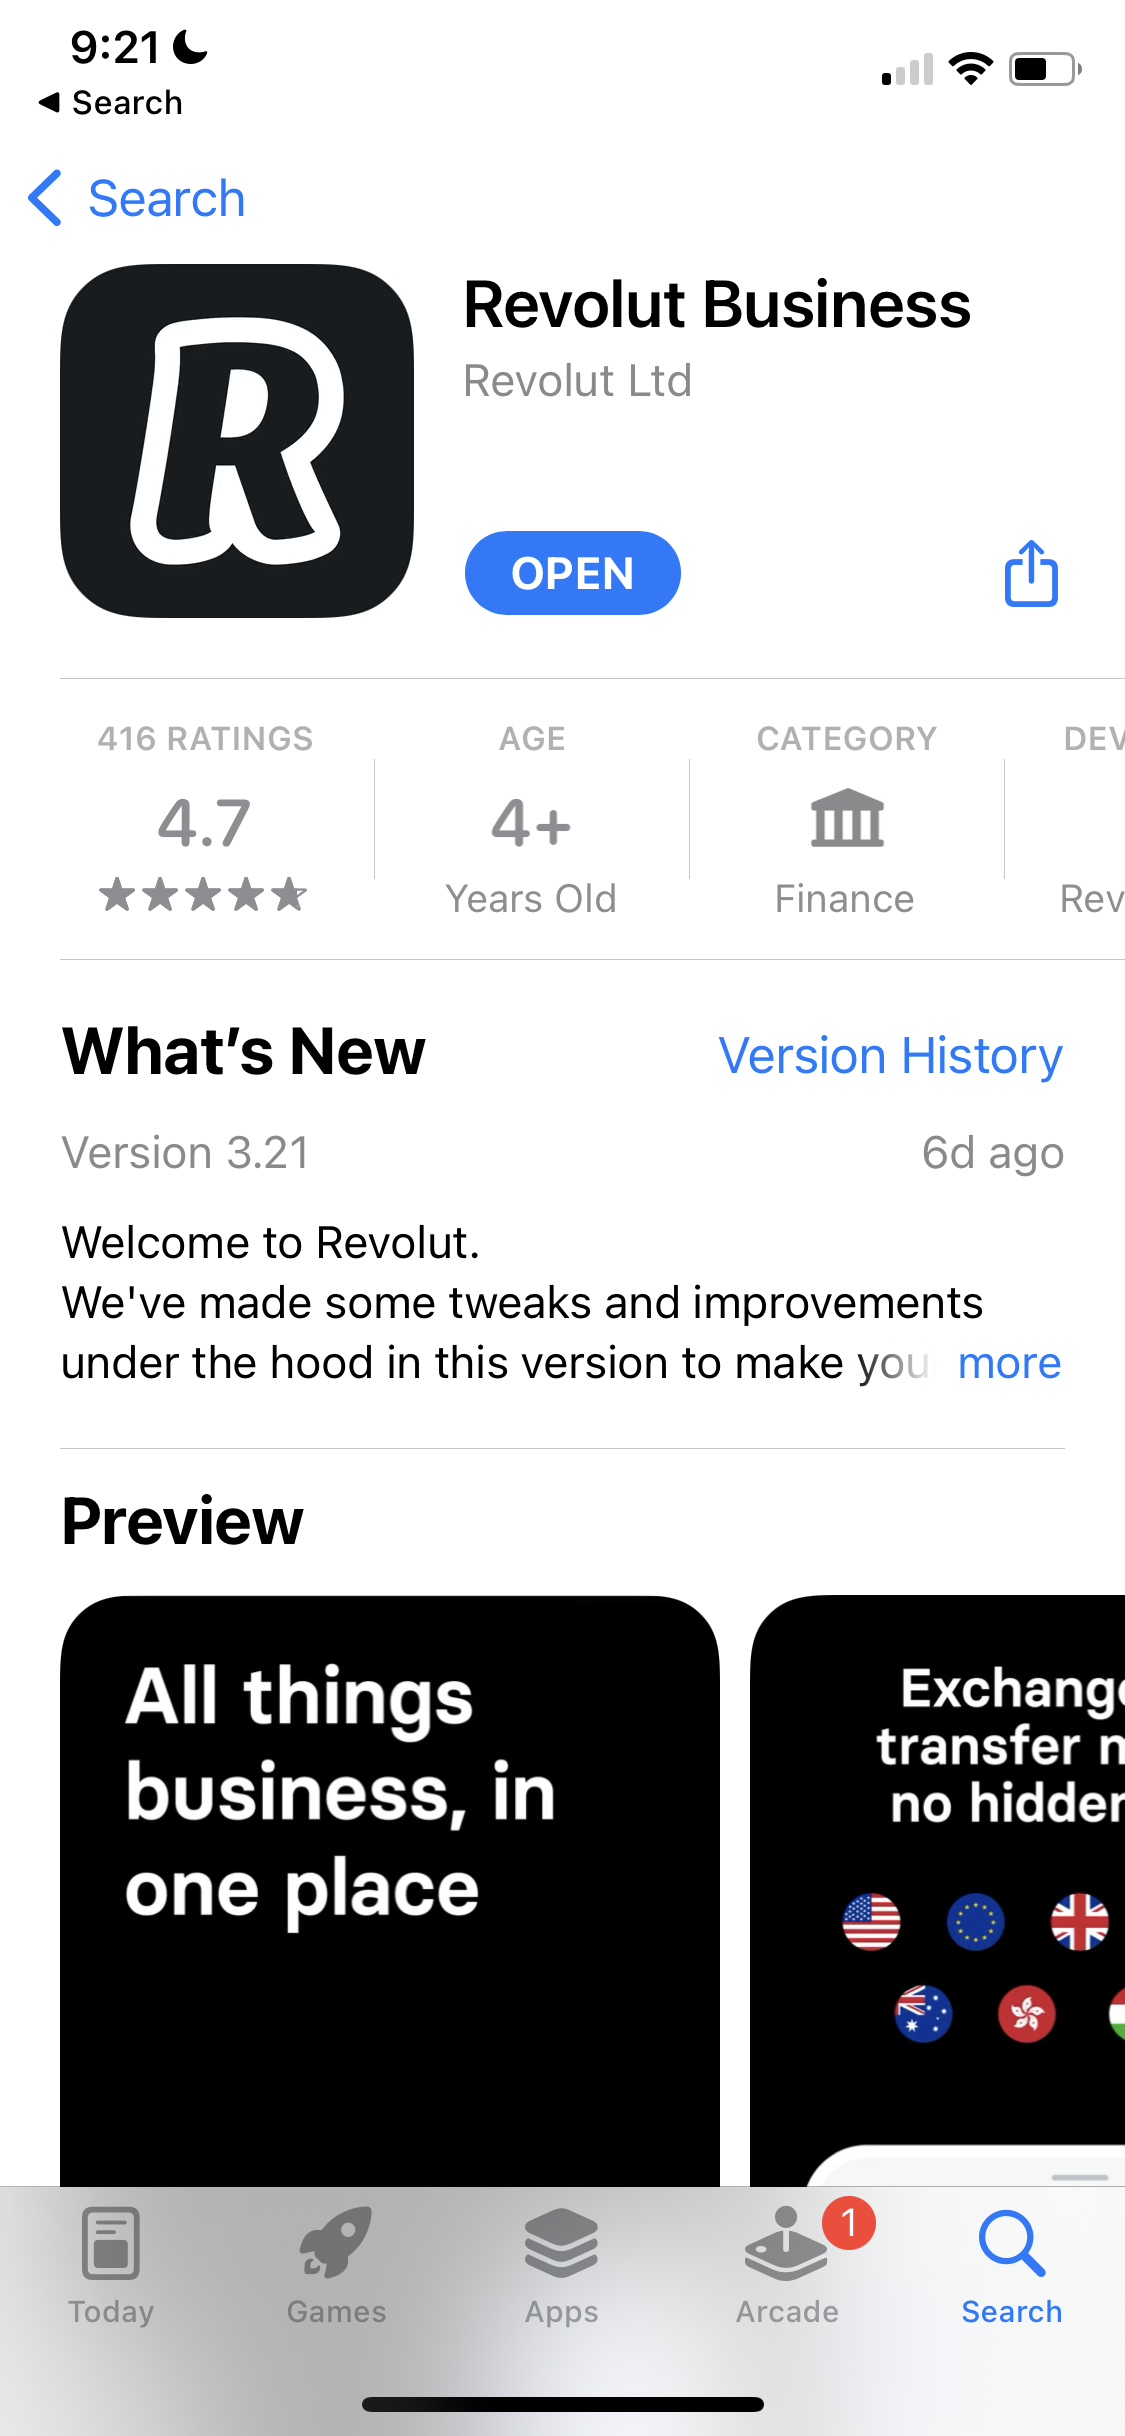 Revolut Business app store listing screenshot